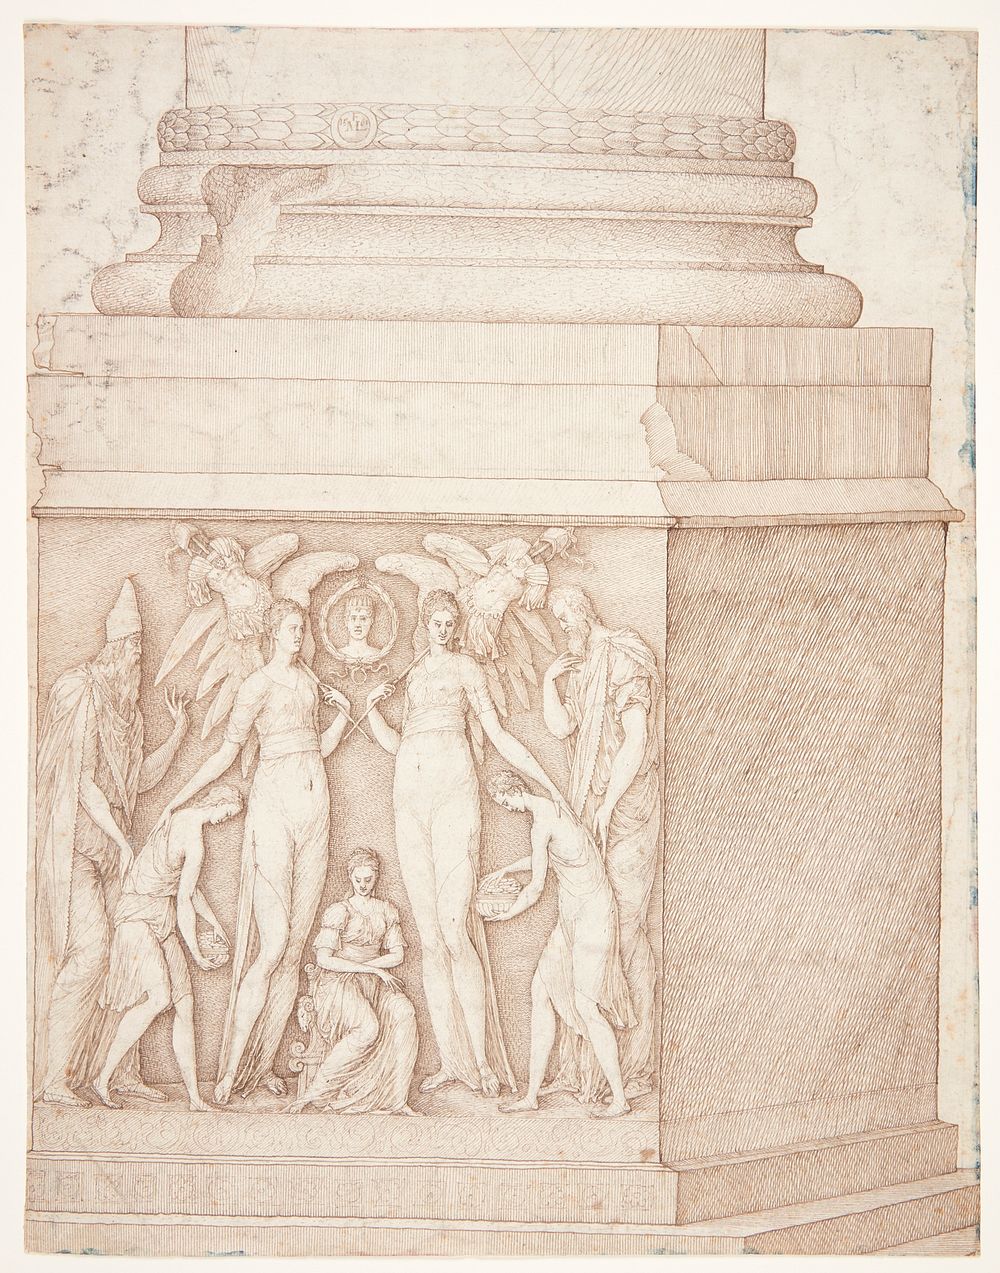 A column's sculptural base by Melchior Lorck